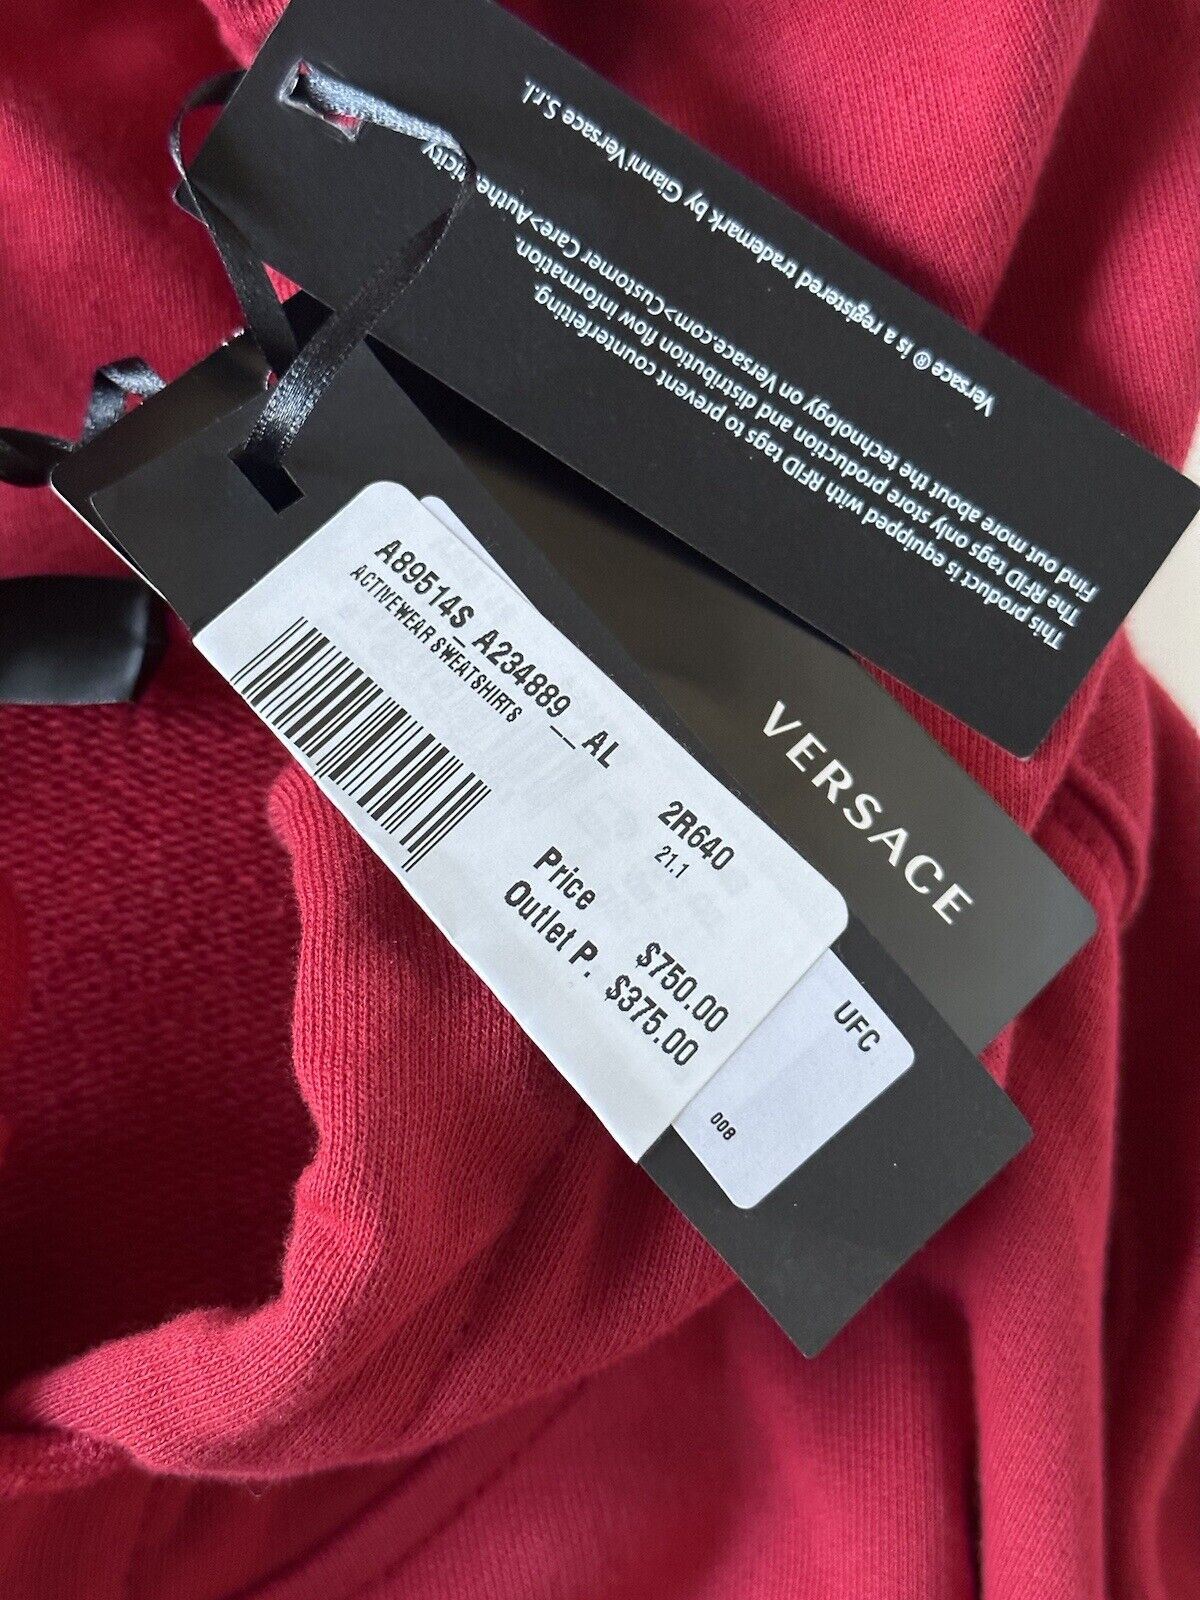 Neu mit Etikett: 750 $ Versace Medusa Print Rotes Baumwoll-Sweatshirt mit Kapuze 4XL A89514S IT 